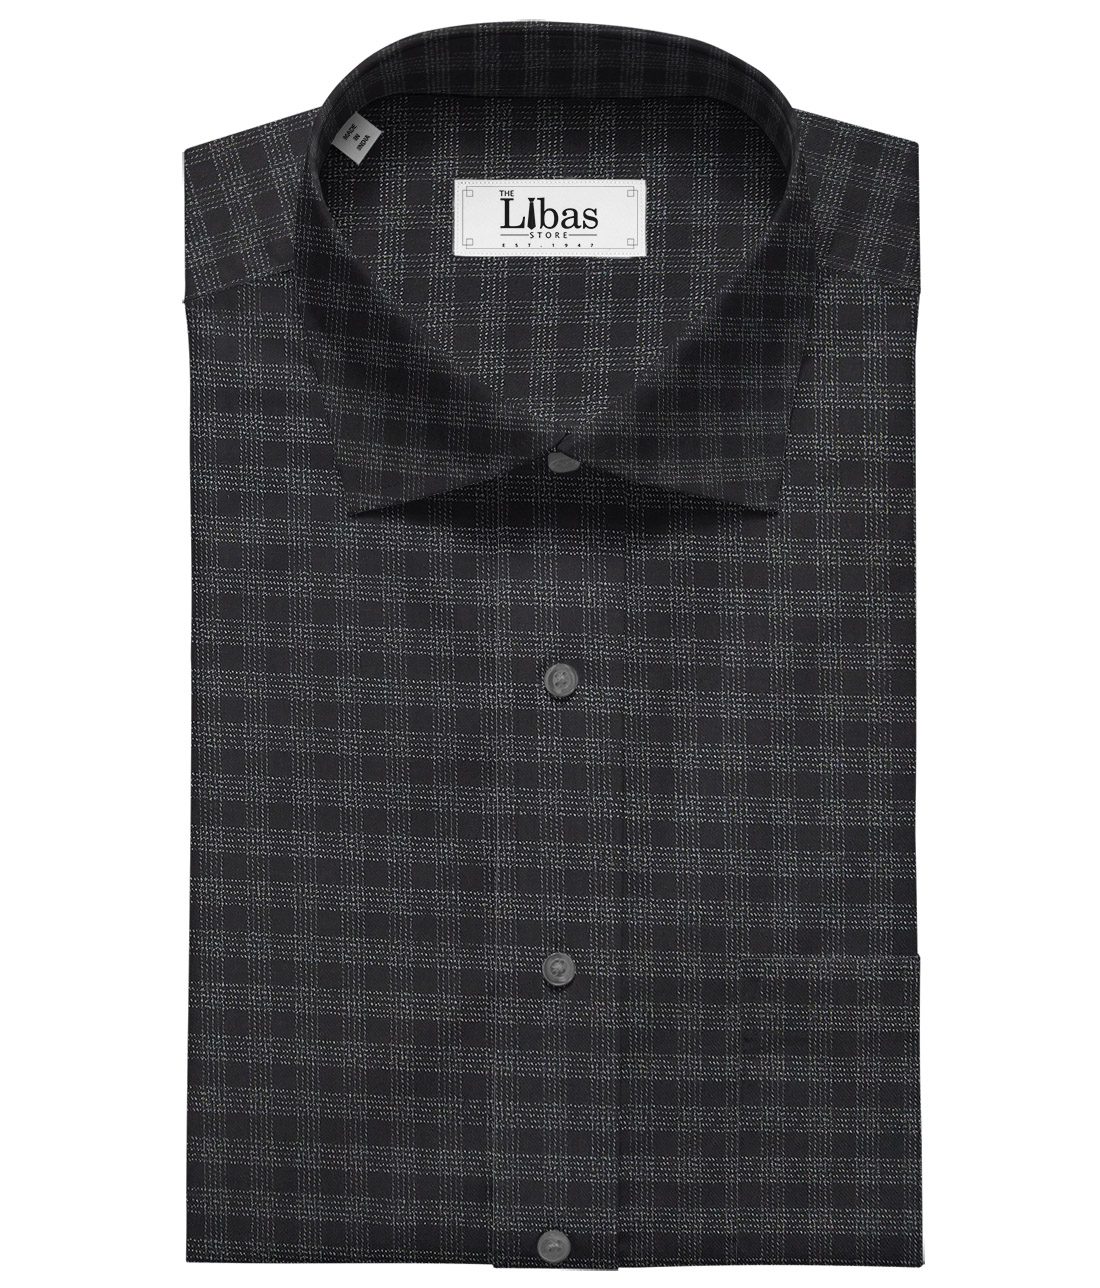 Soktas Black 100% Giza Cotton Grey Checks Shirt Fabric (1.60 M)